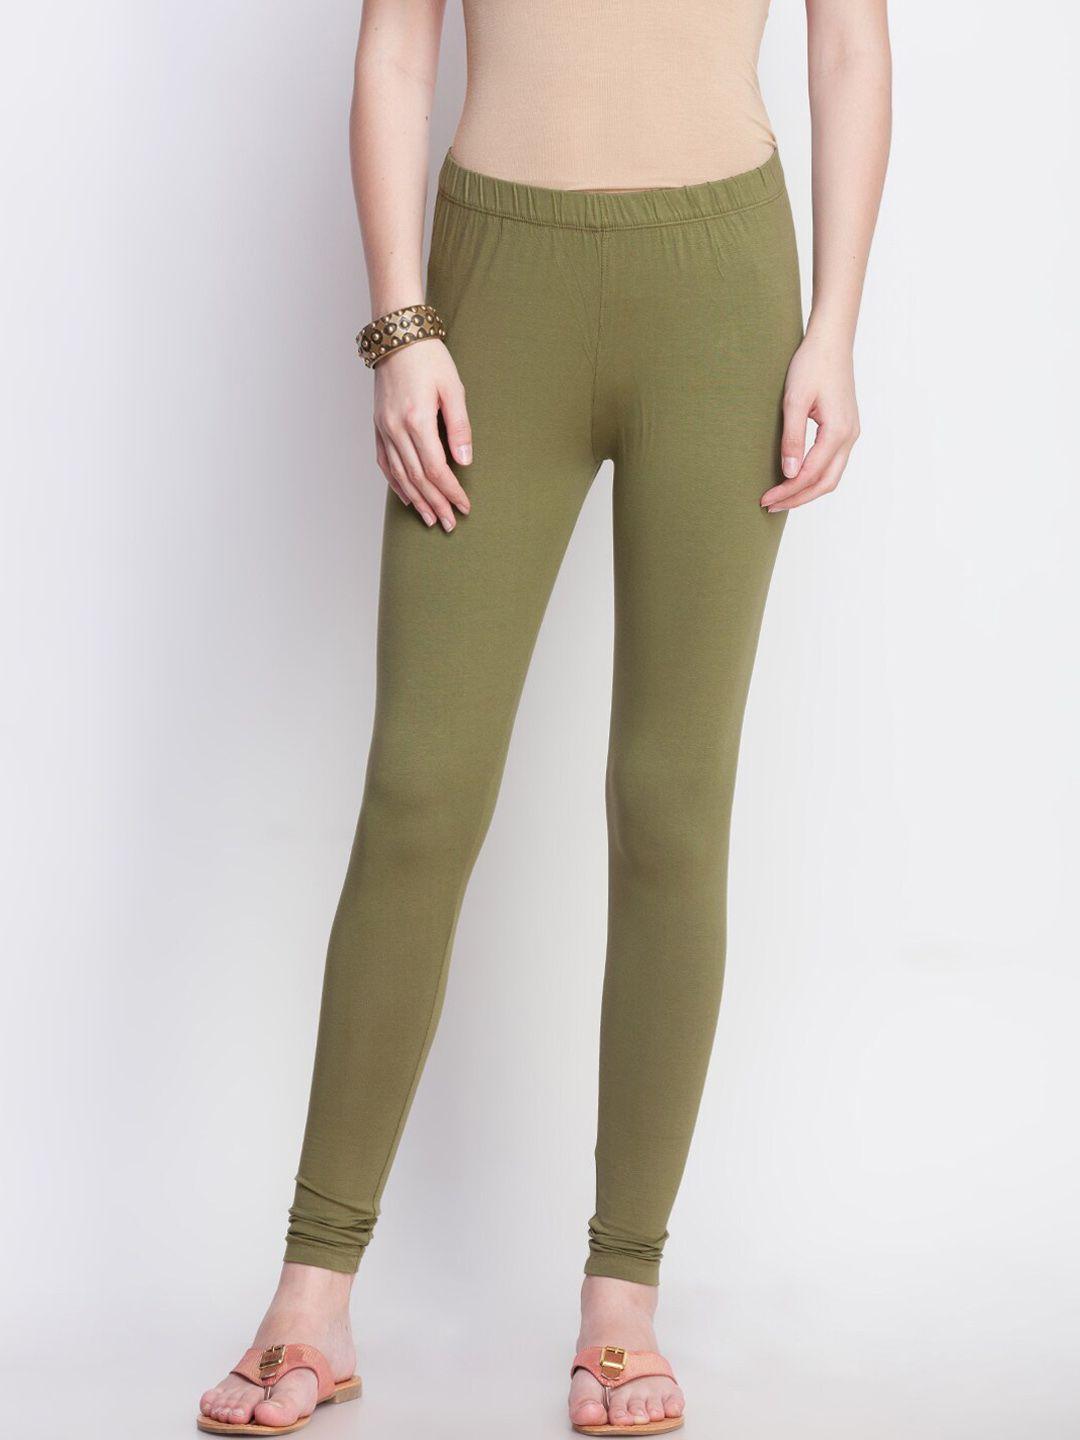 dollar missy women green solid slim-fit cotton ankle-length leggings